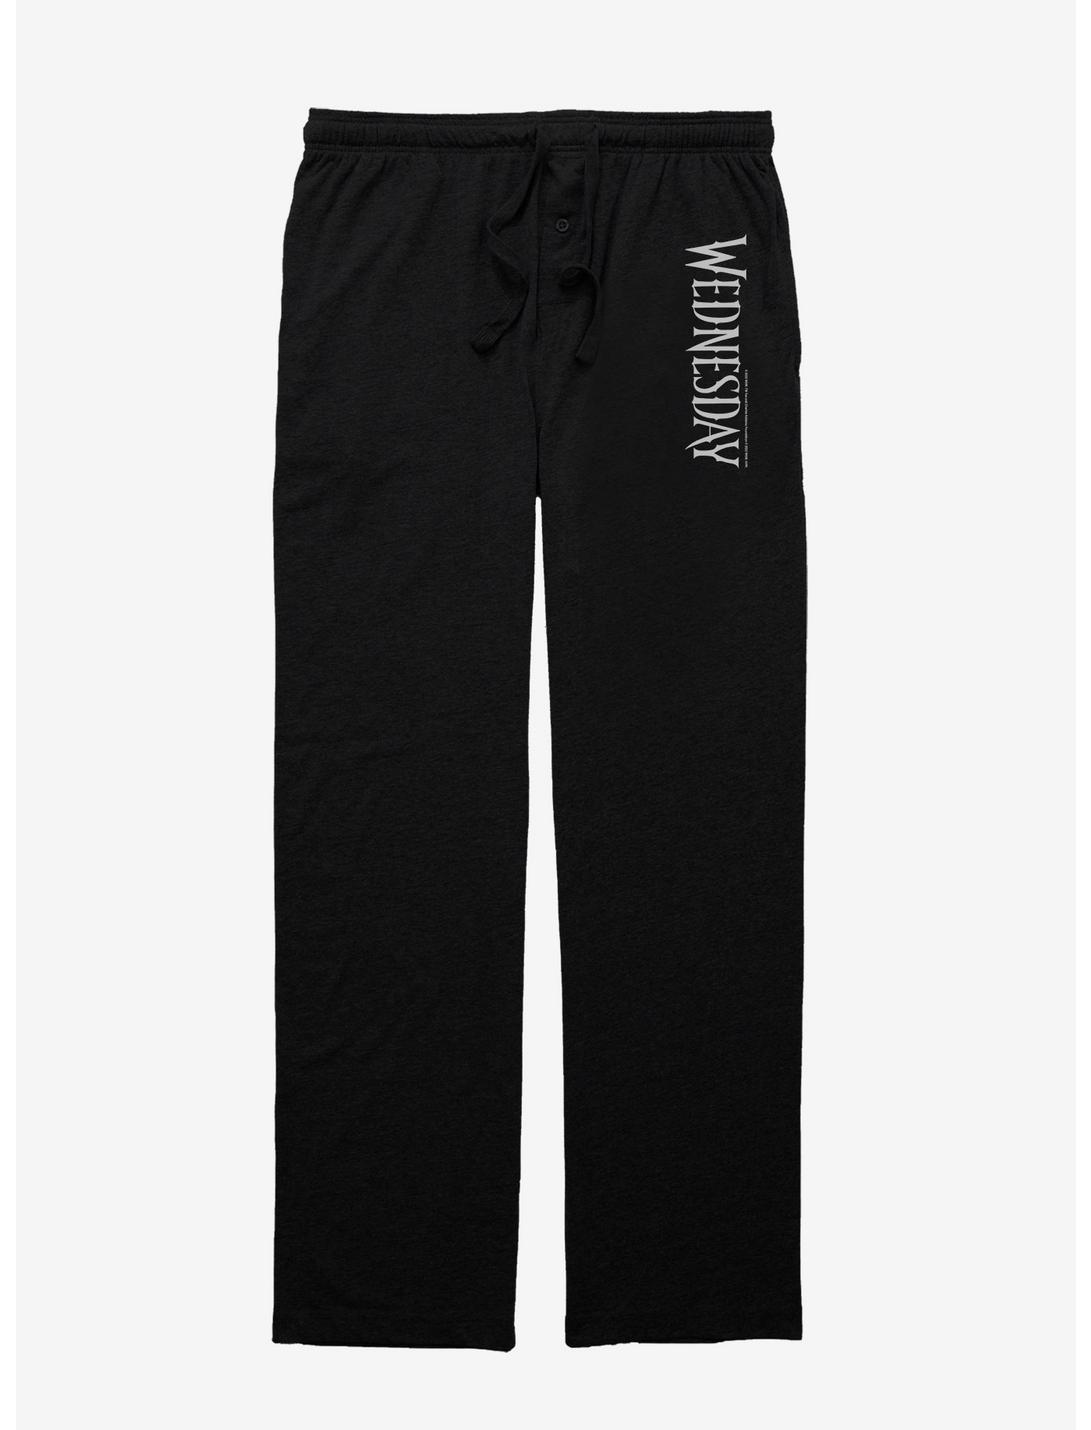 Wednesday Name Logo Pajama Pants, BLACK, hi-res